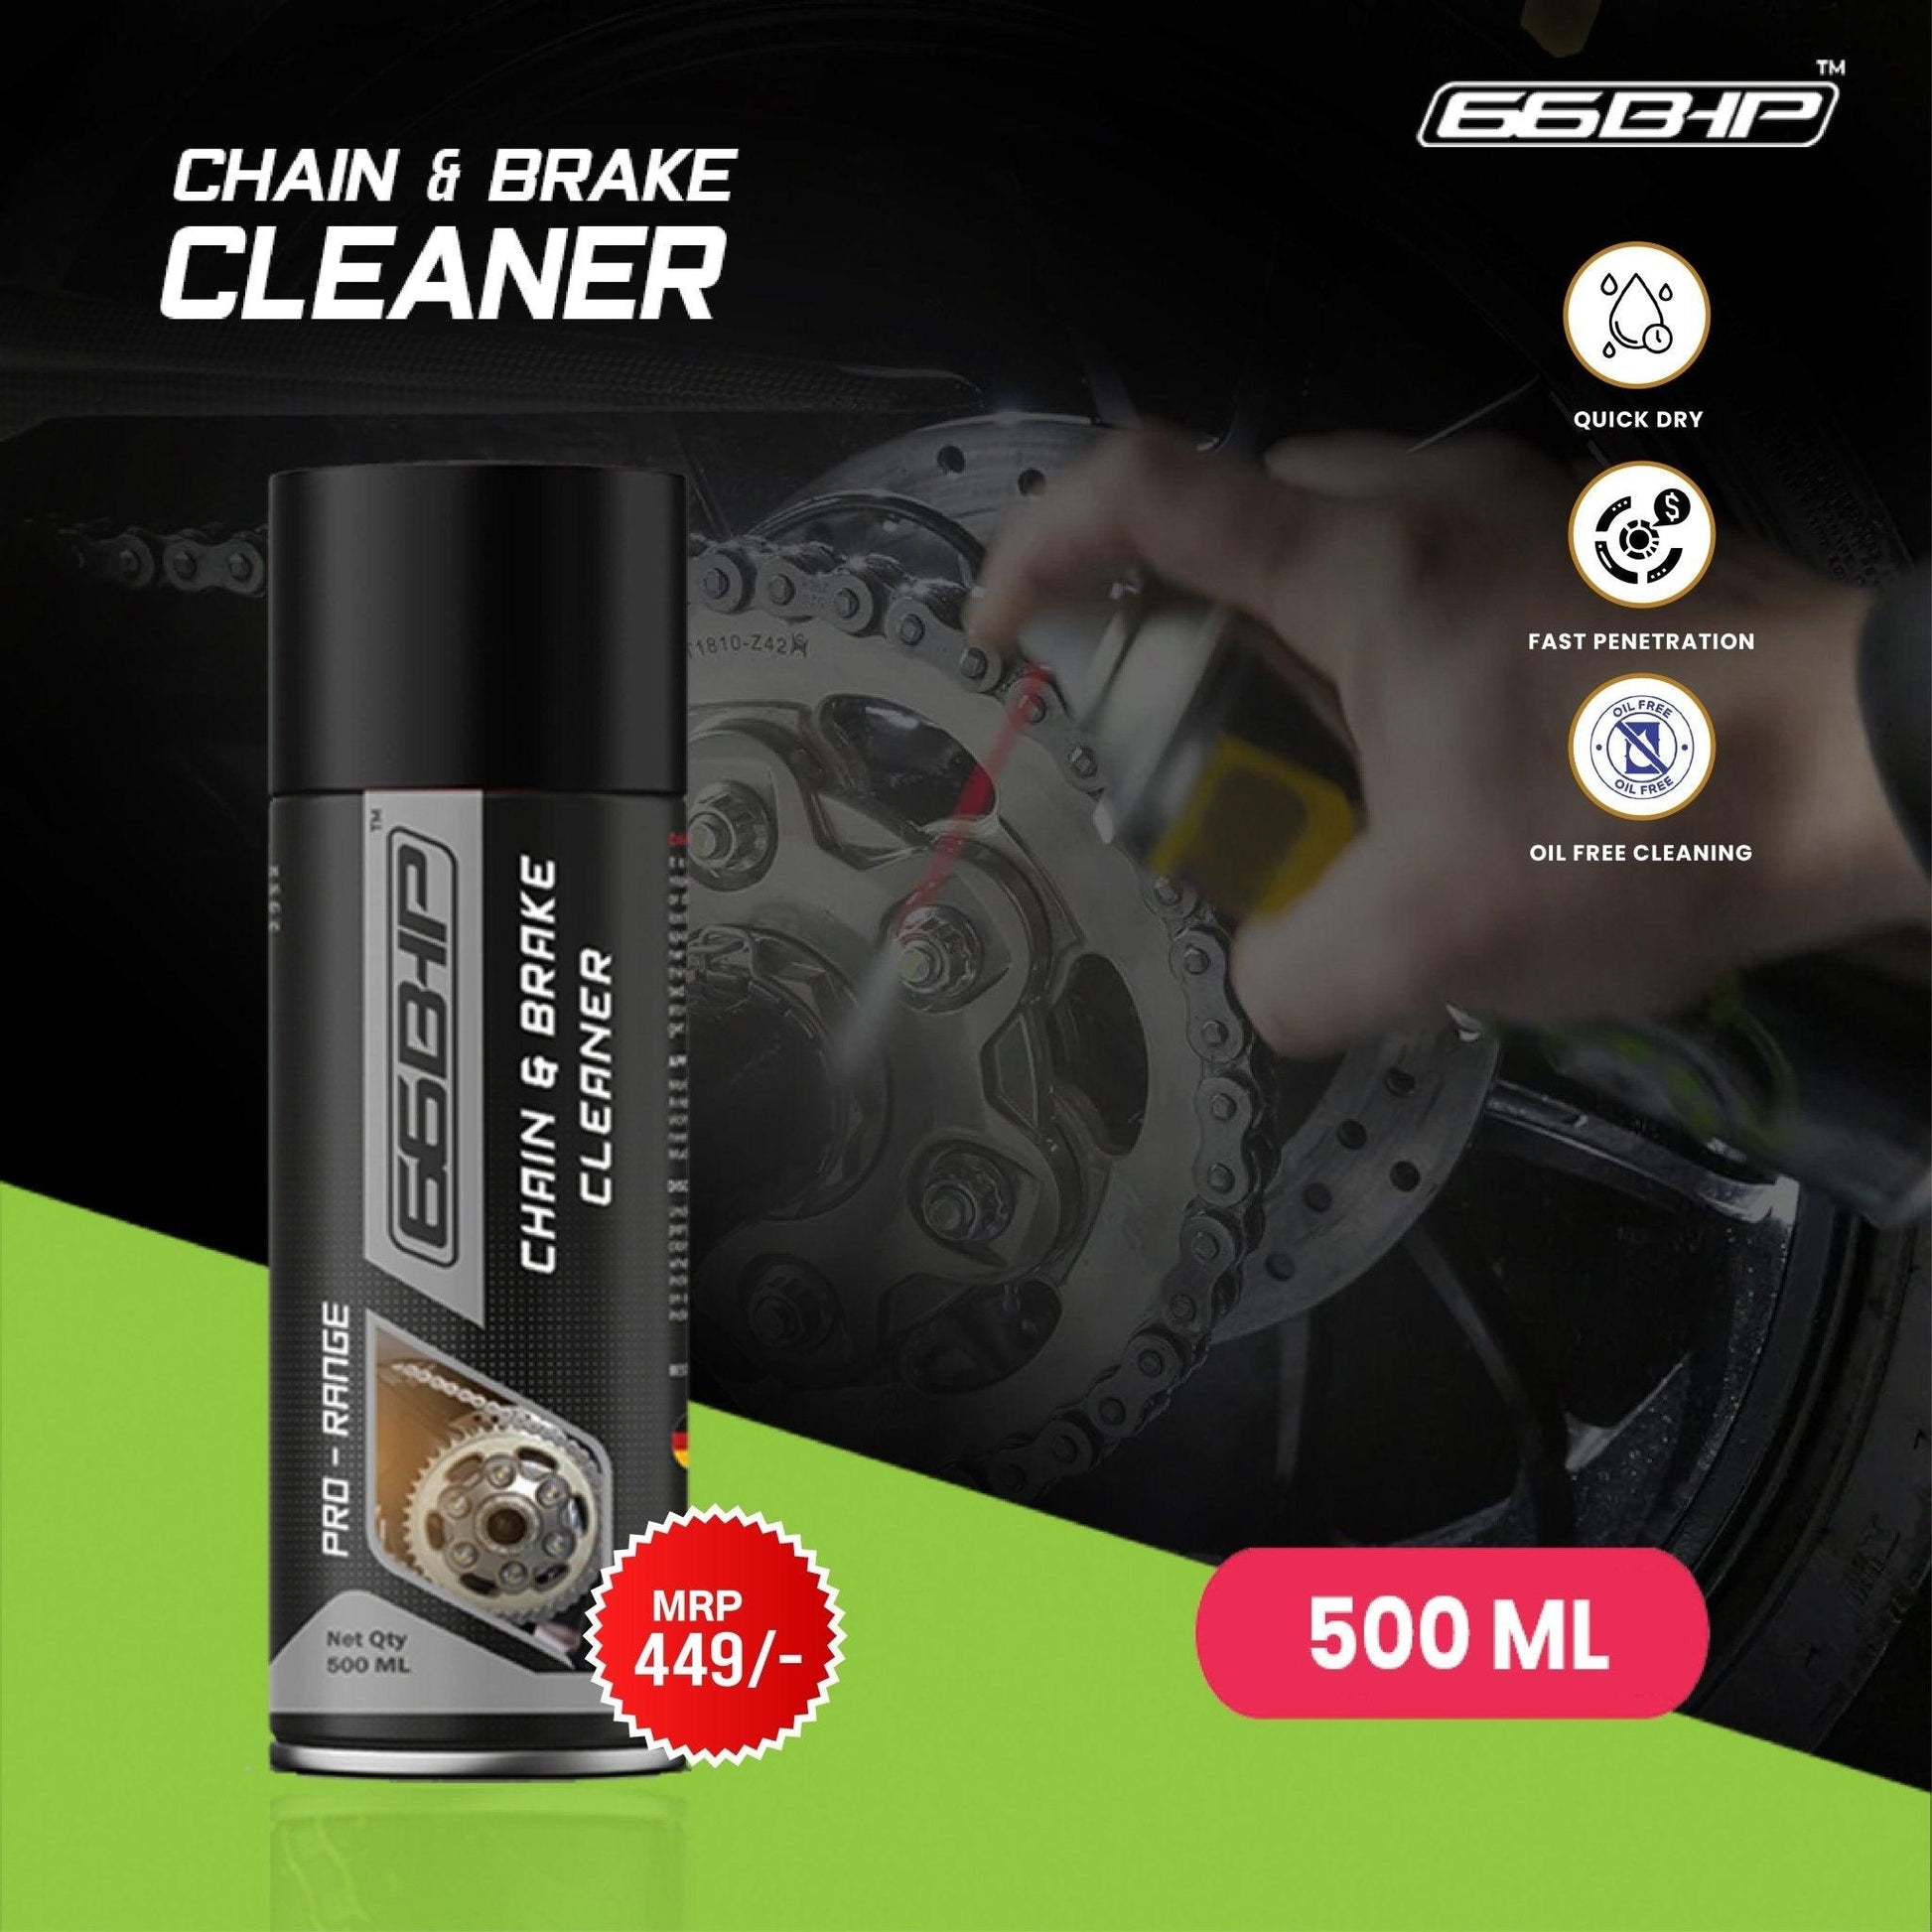 66 BHP Heavy duty chain cleaner (500 ml) - Moto Modz